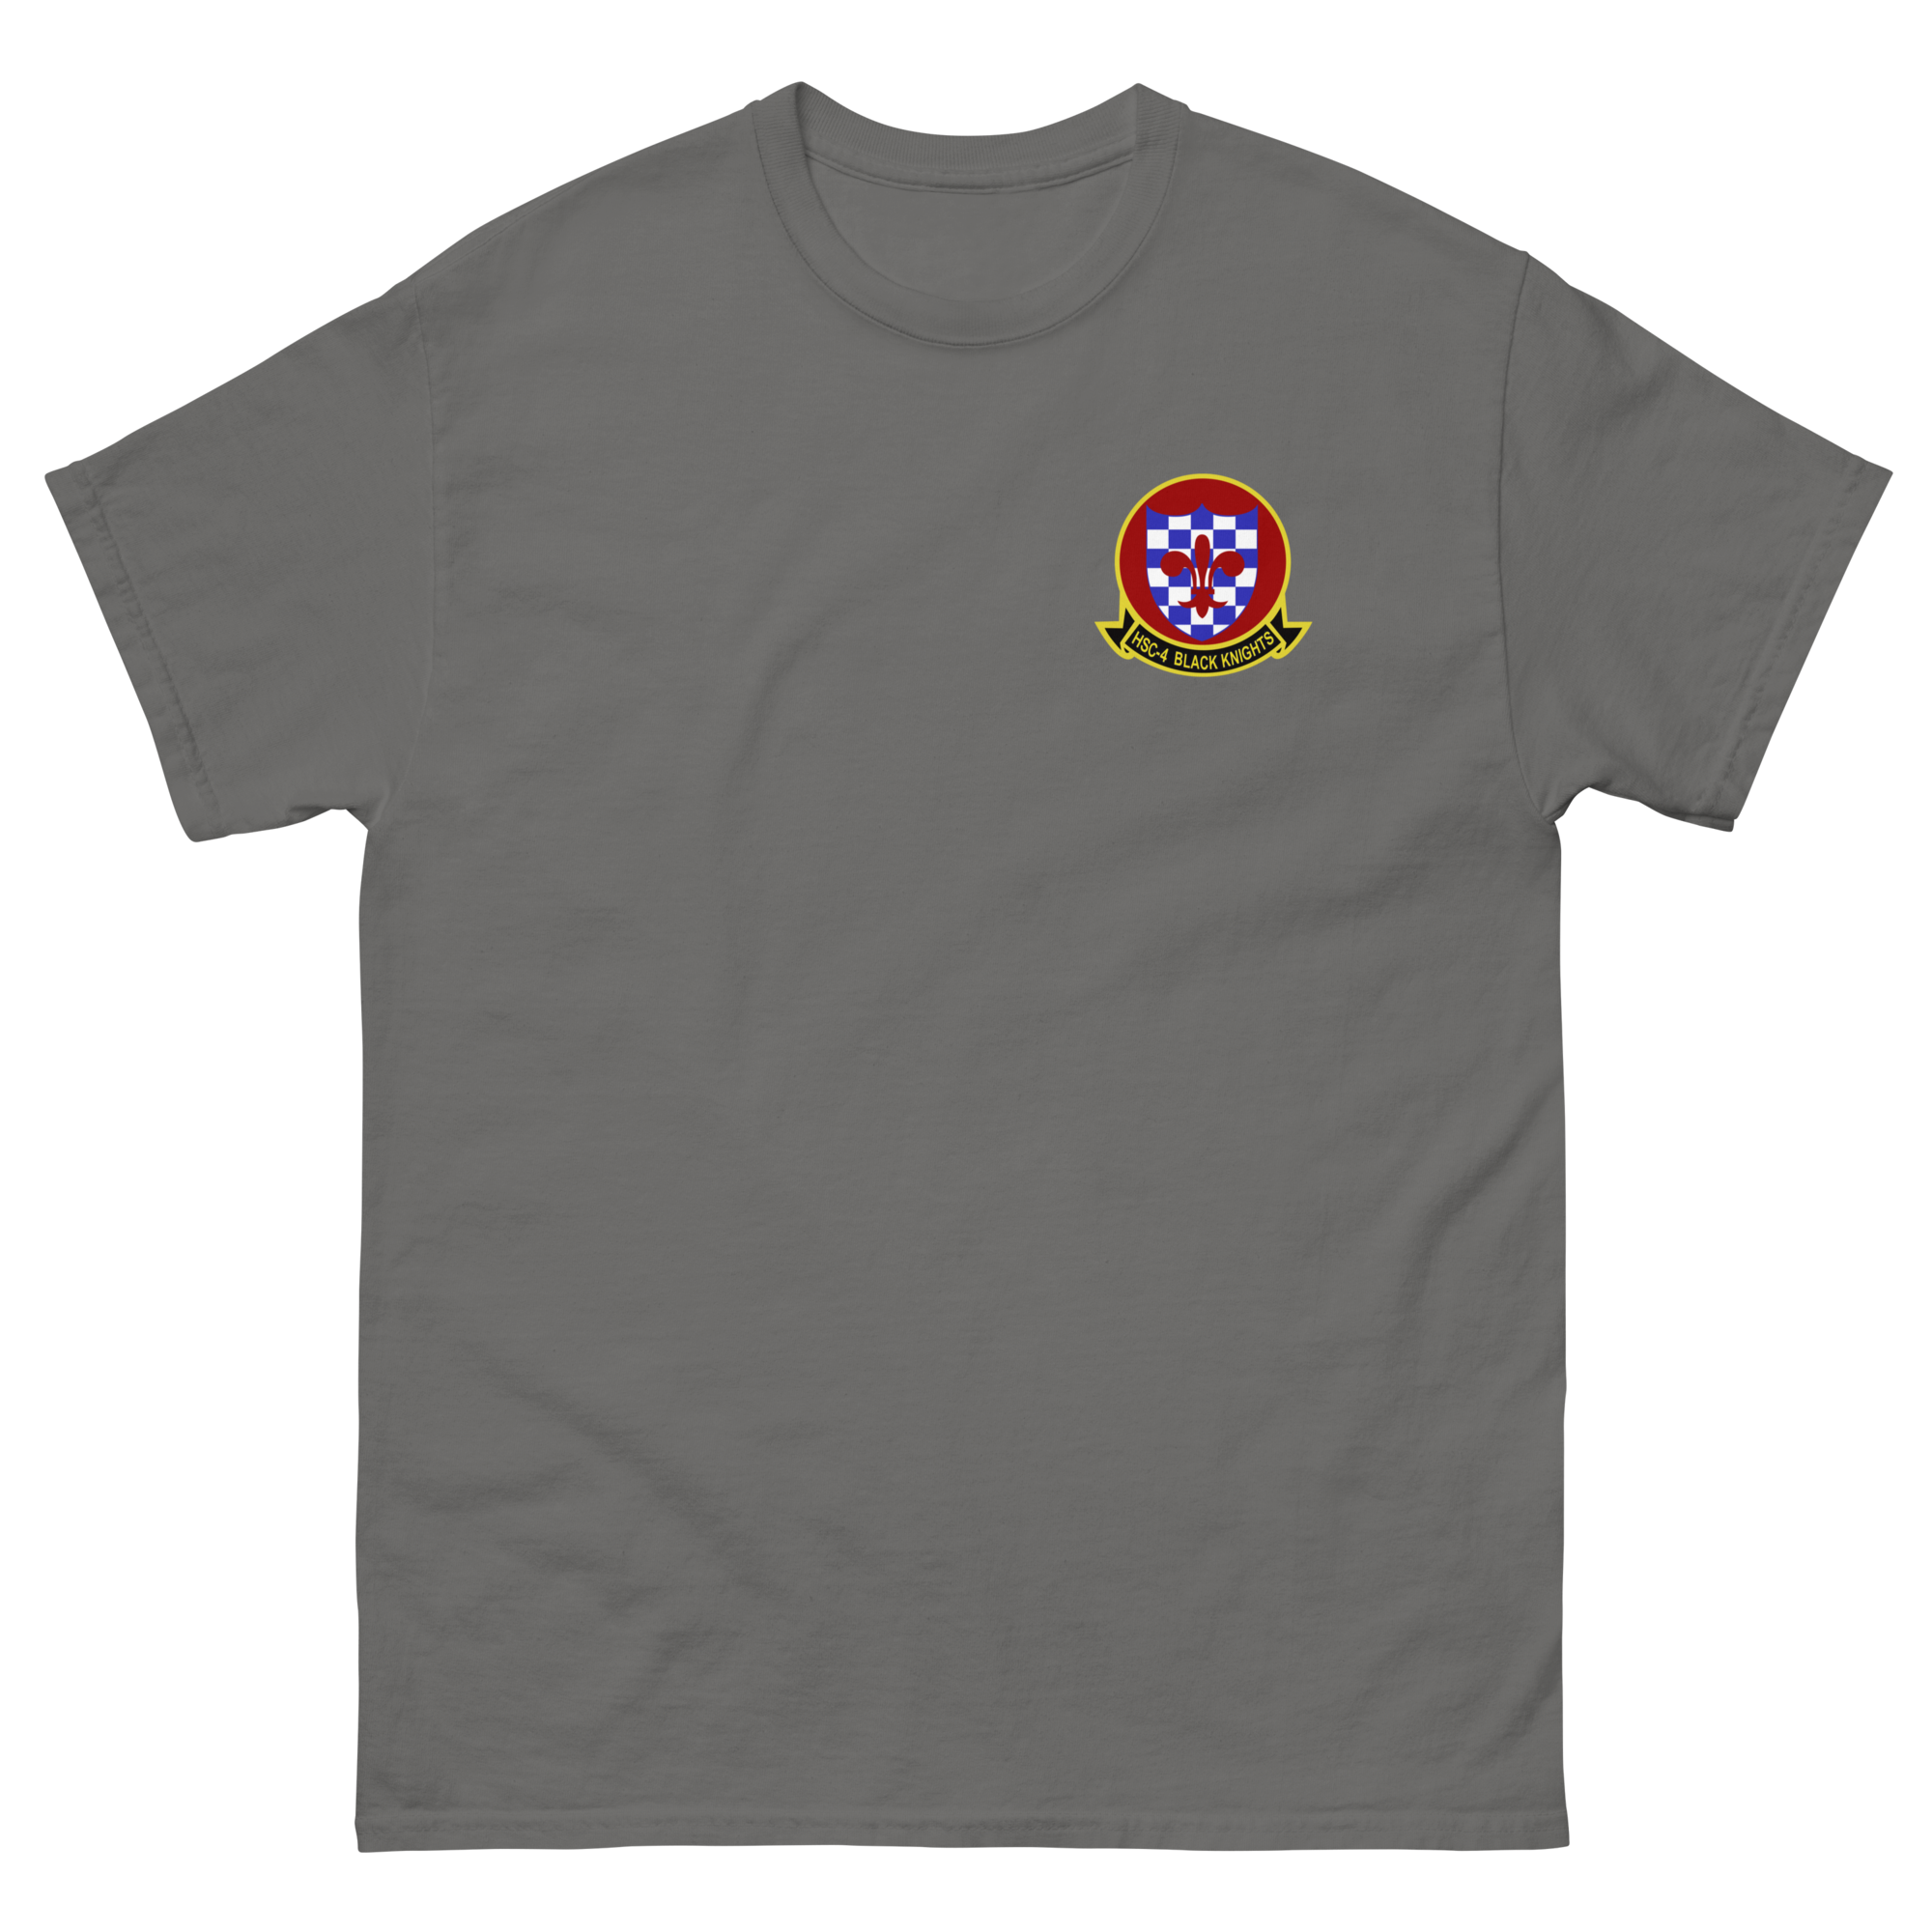 HSC-4 Black Knights Squadron Crest Shirt